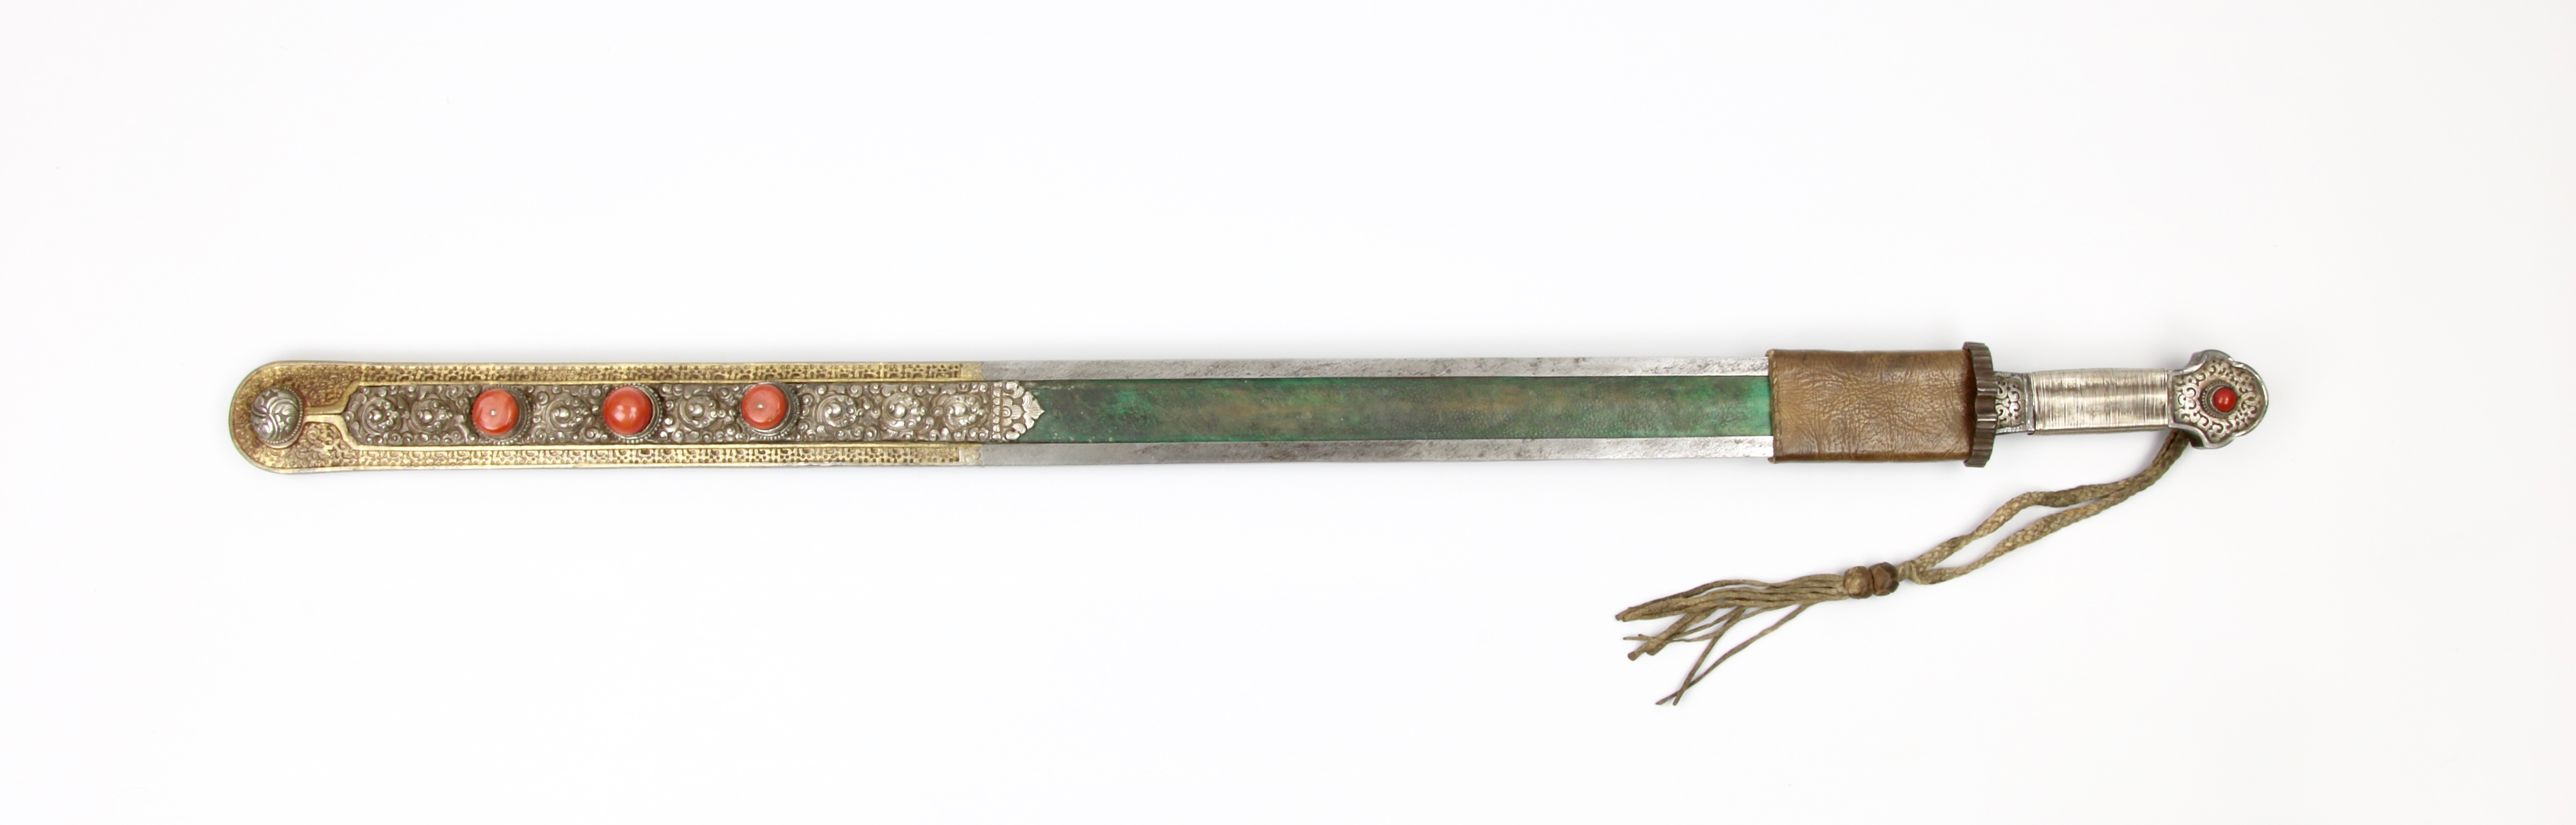 Tibetan sword sheathed